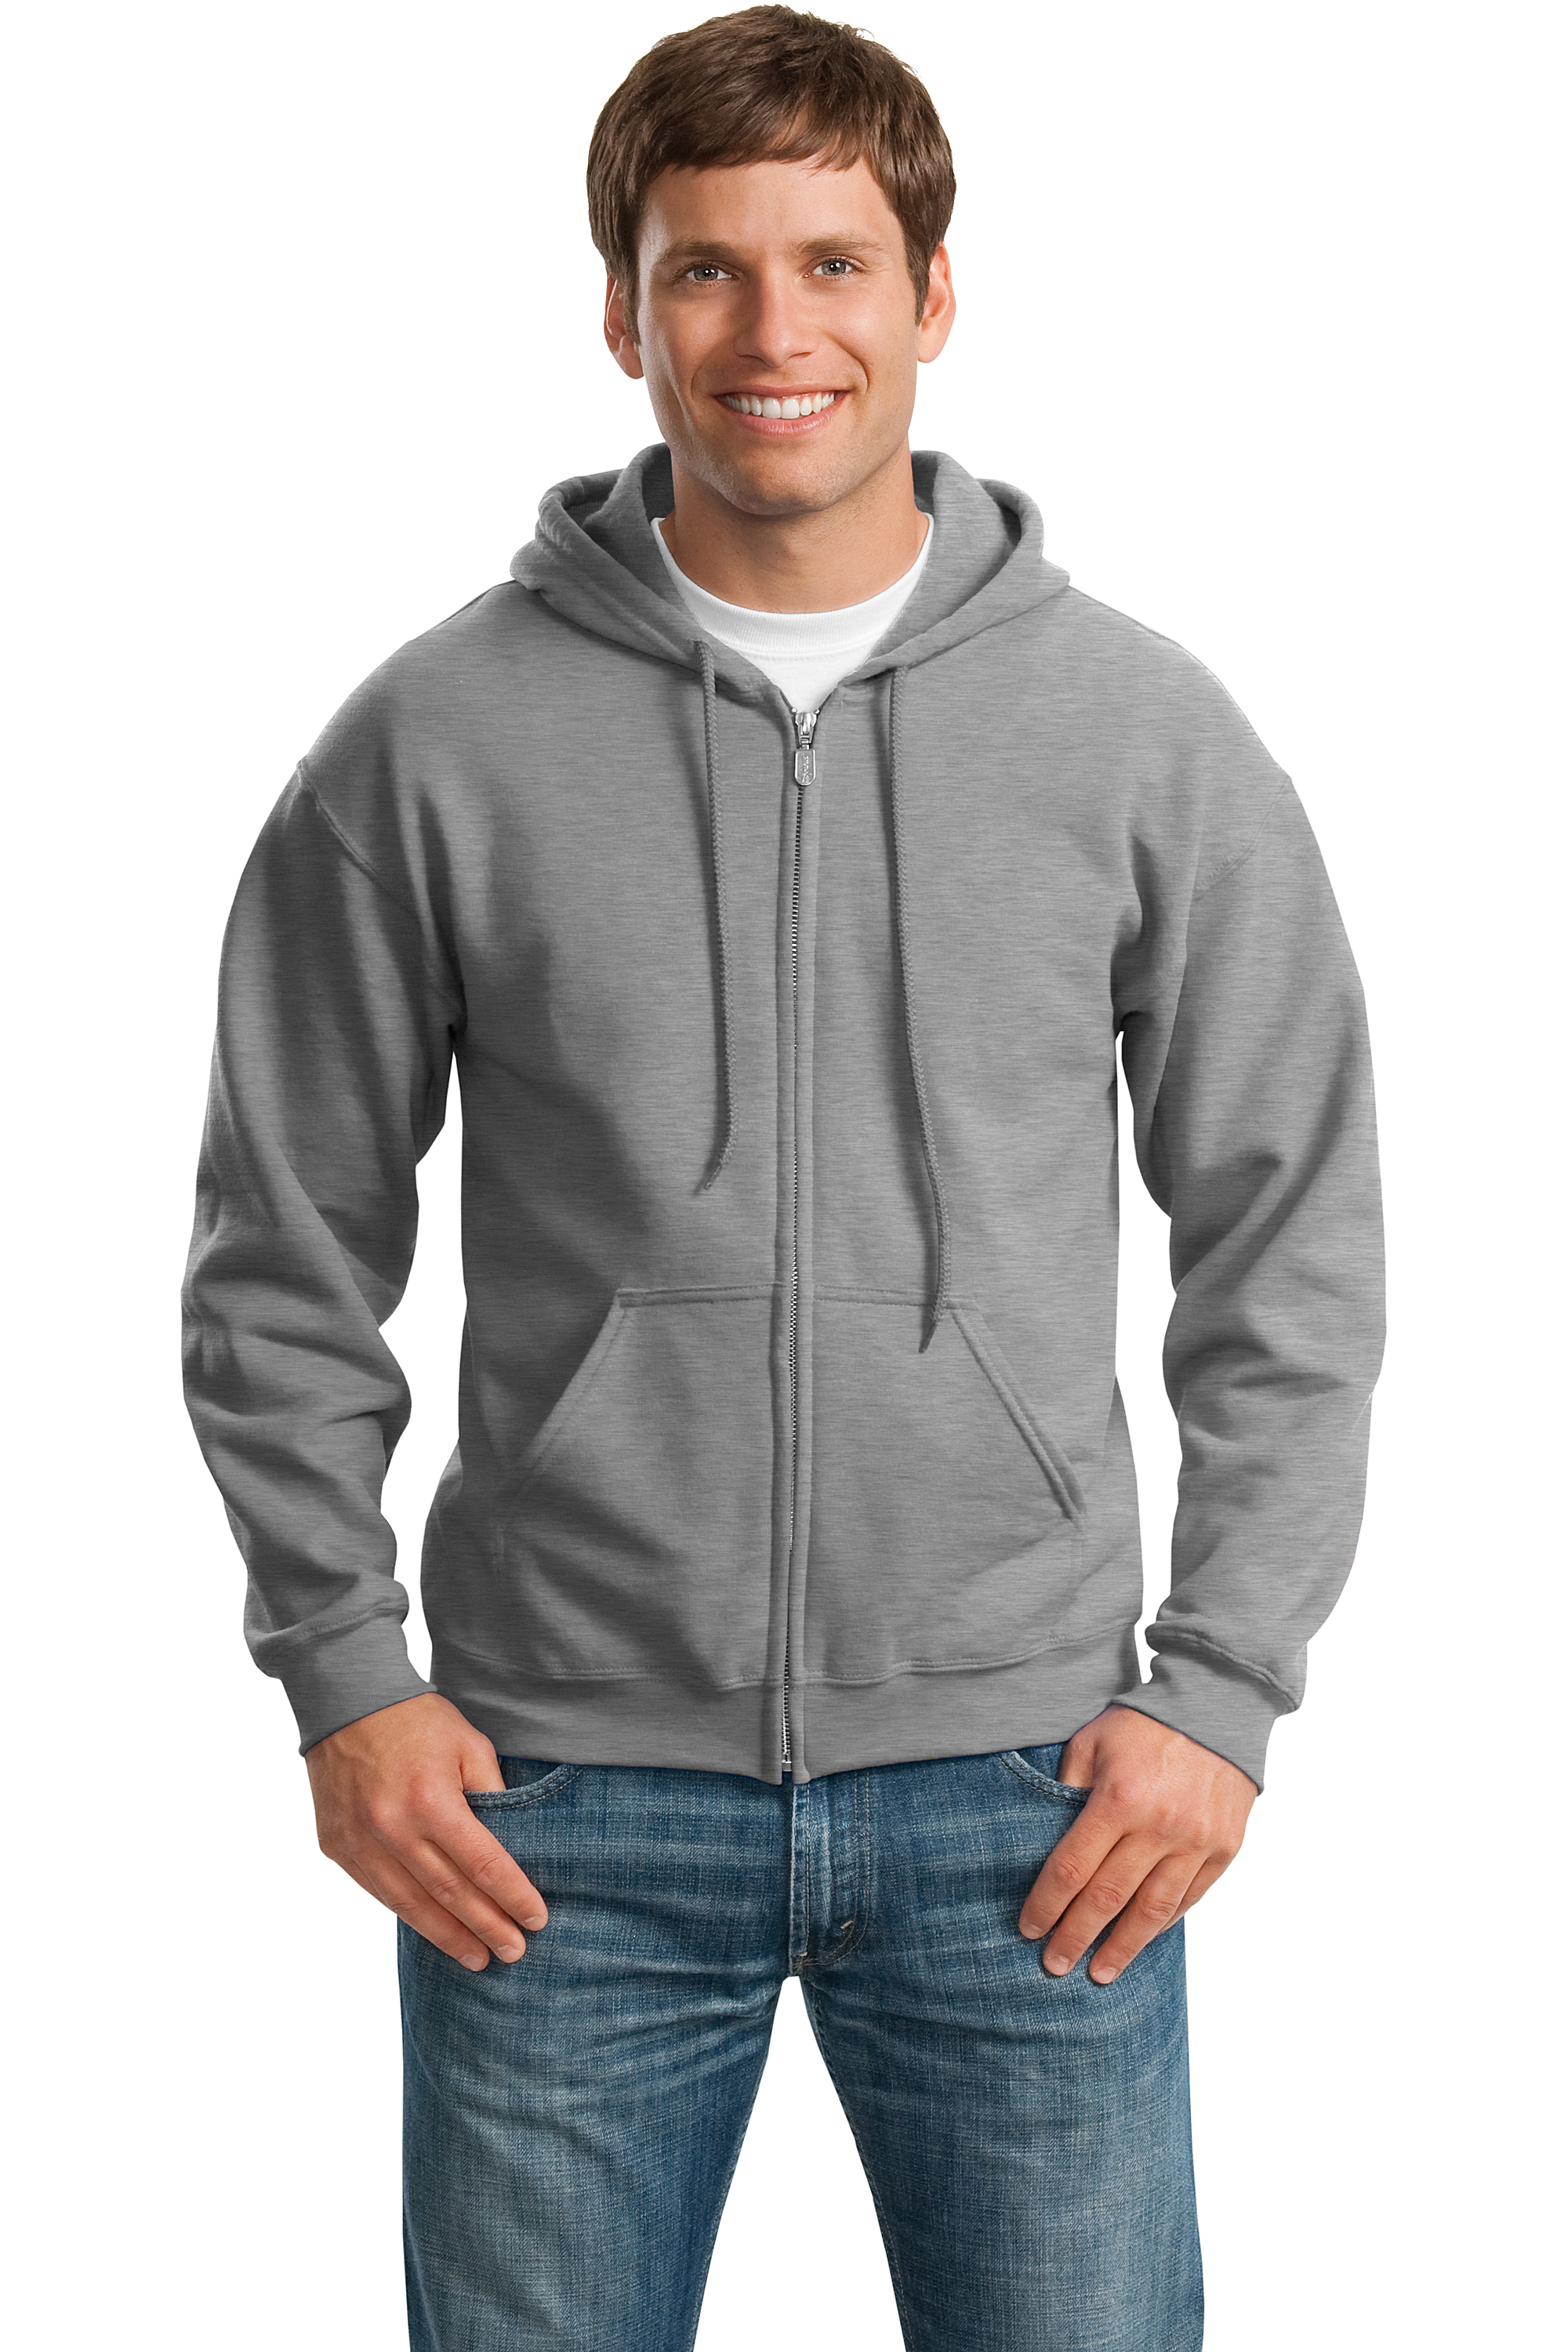 Gildan Heavy Blend Full Zip Hooded Sweatshirt